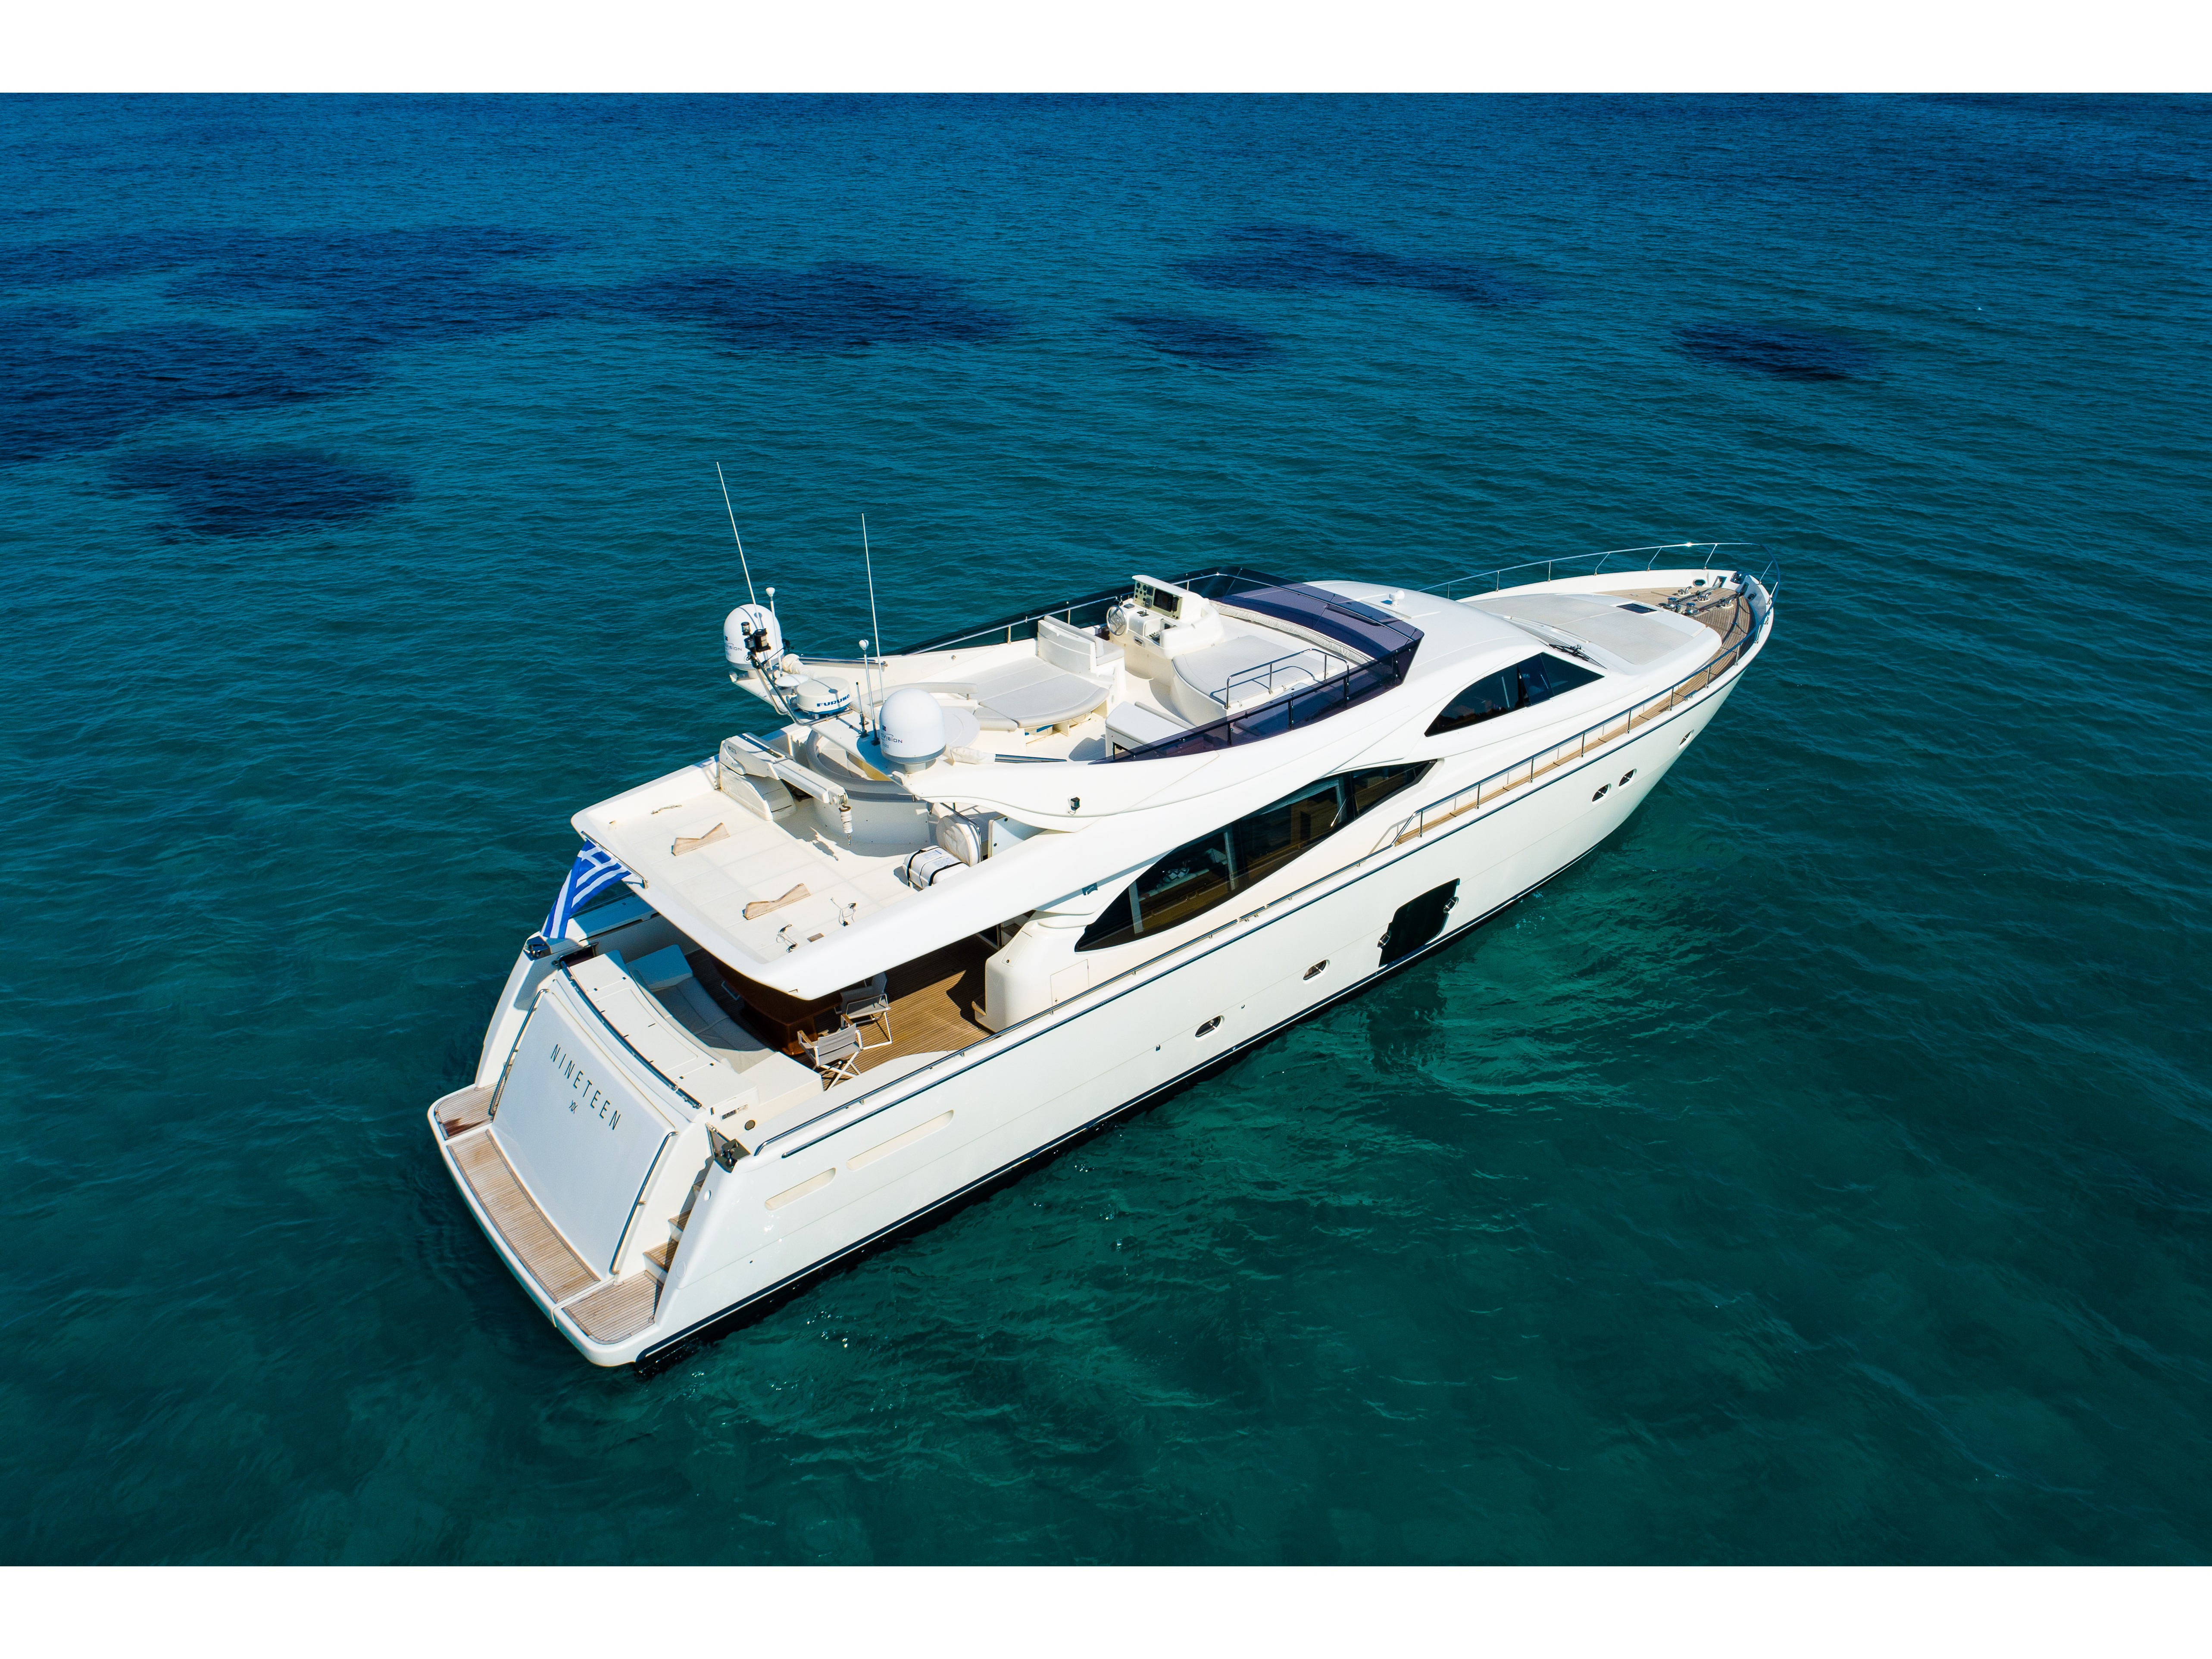 Ferretti 780 - Superyacht charter St Martin & Boat hire in Greece Athens and Saronic Gulf Athens Hellinikon Agios Kosmas Marina 1